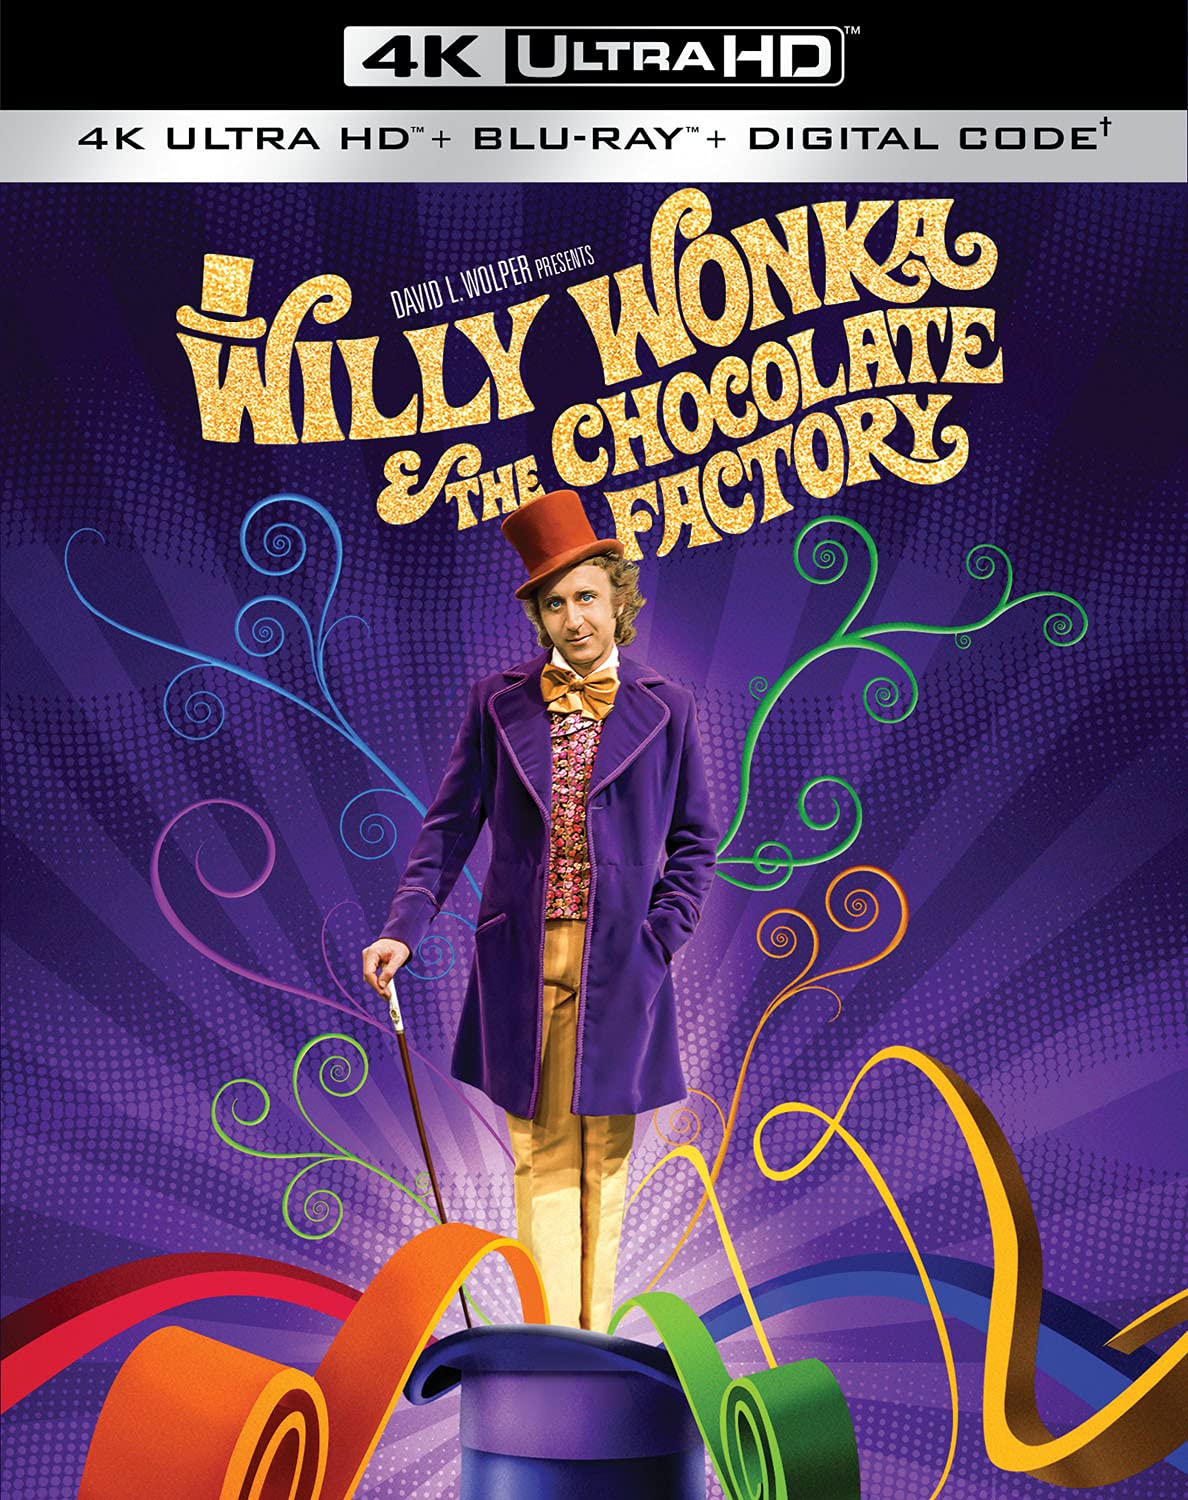 Willy Wonka & the Chocolate Factory 4k Blu-ray